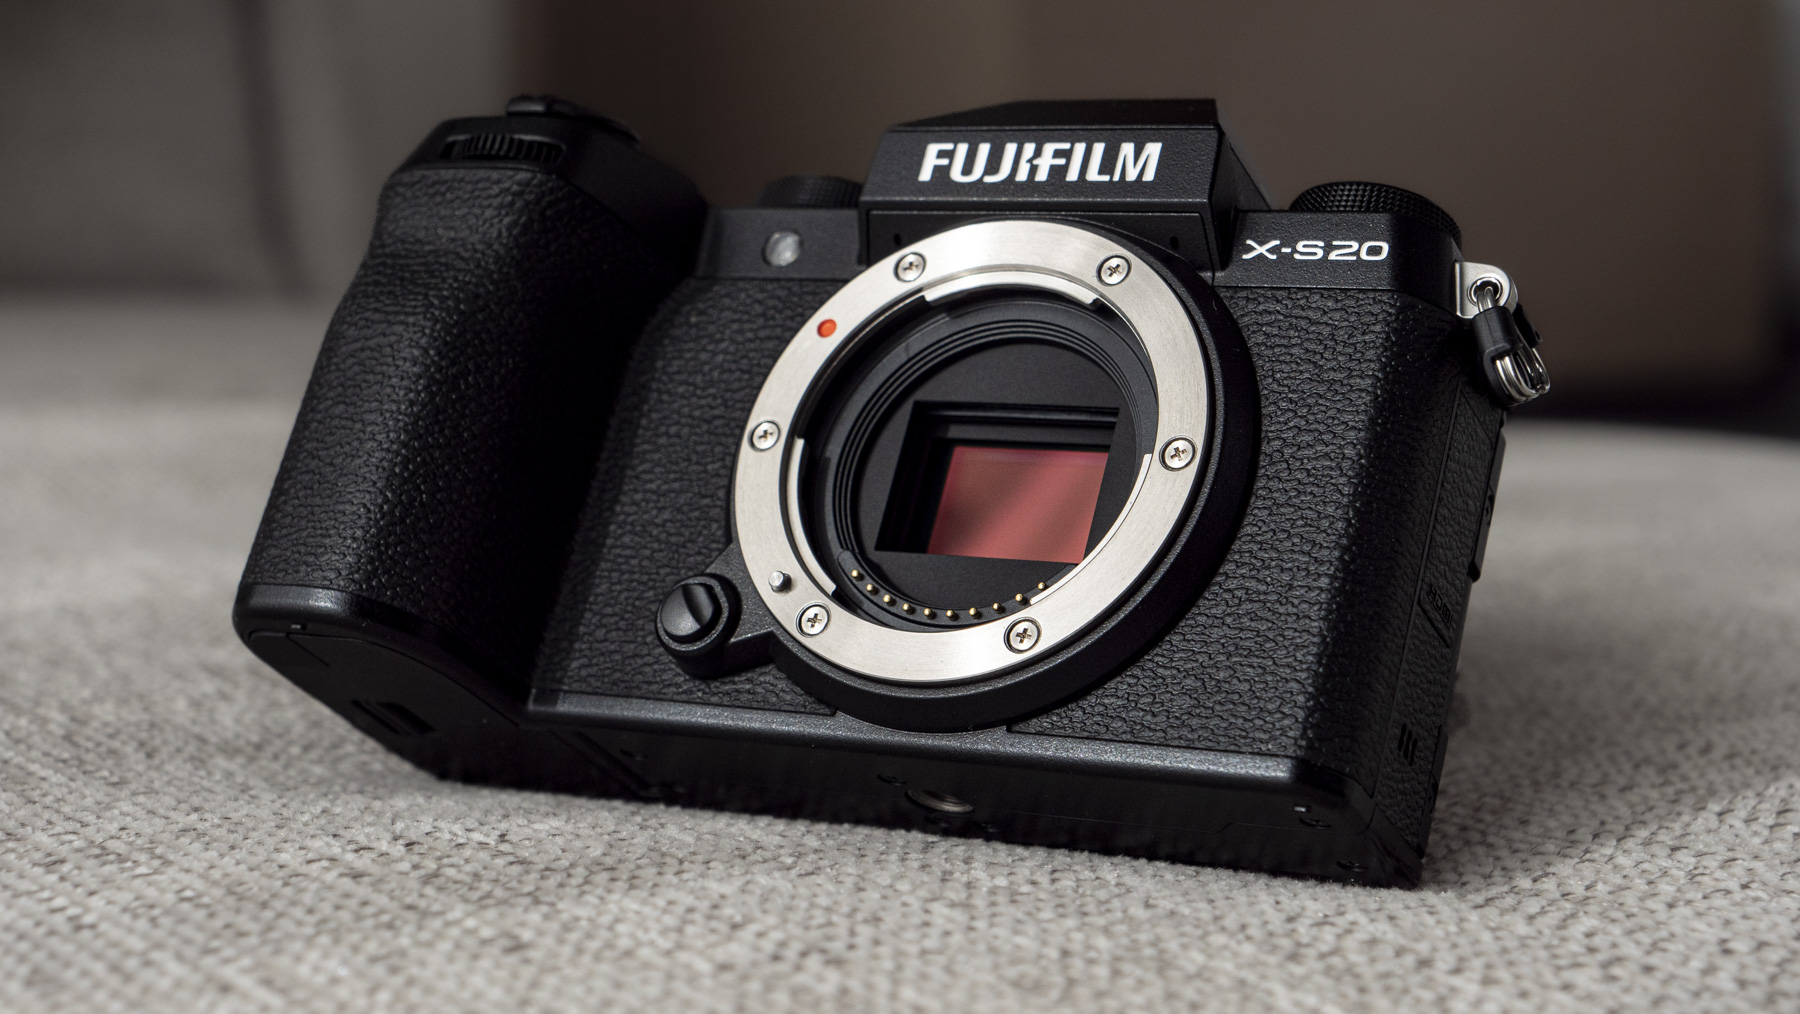 Fujifilm X-S20 camera front with sensor